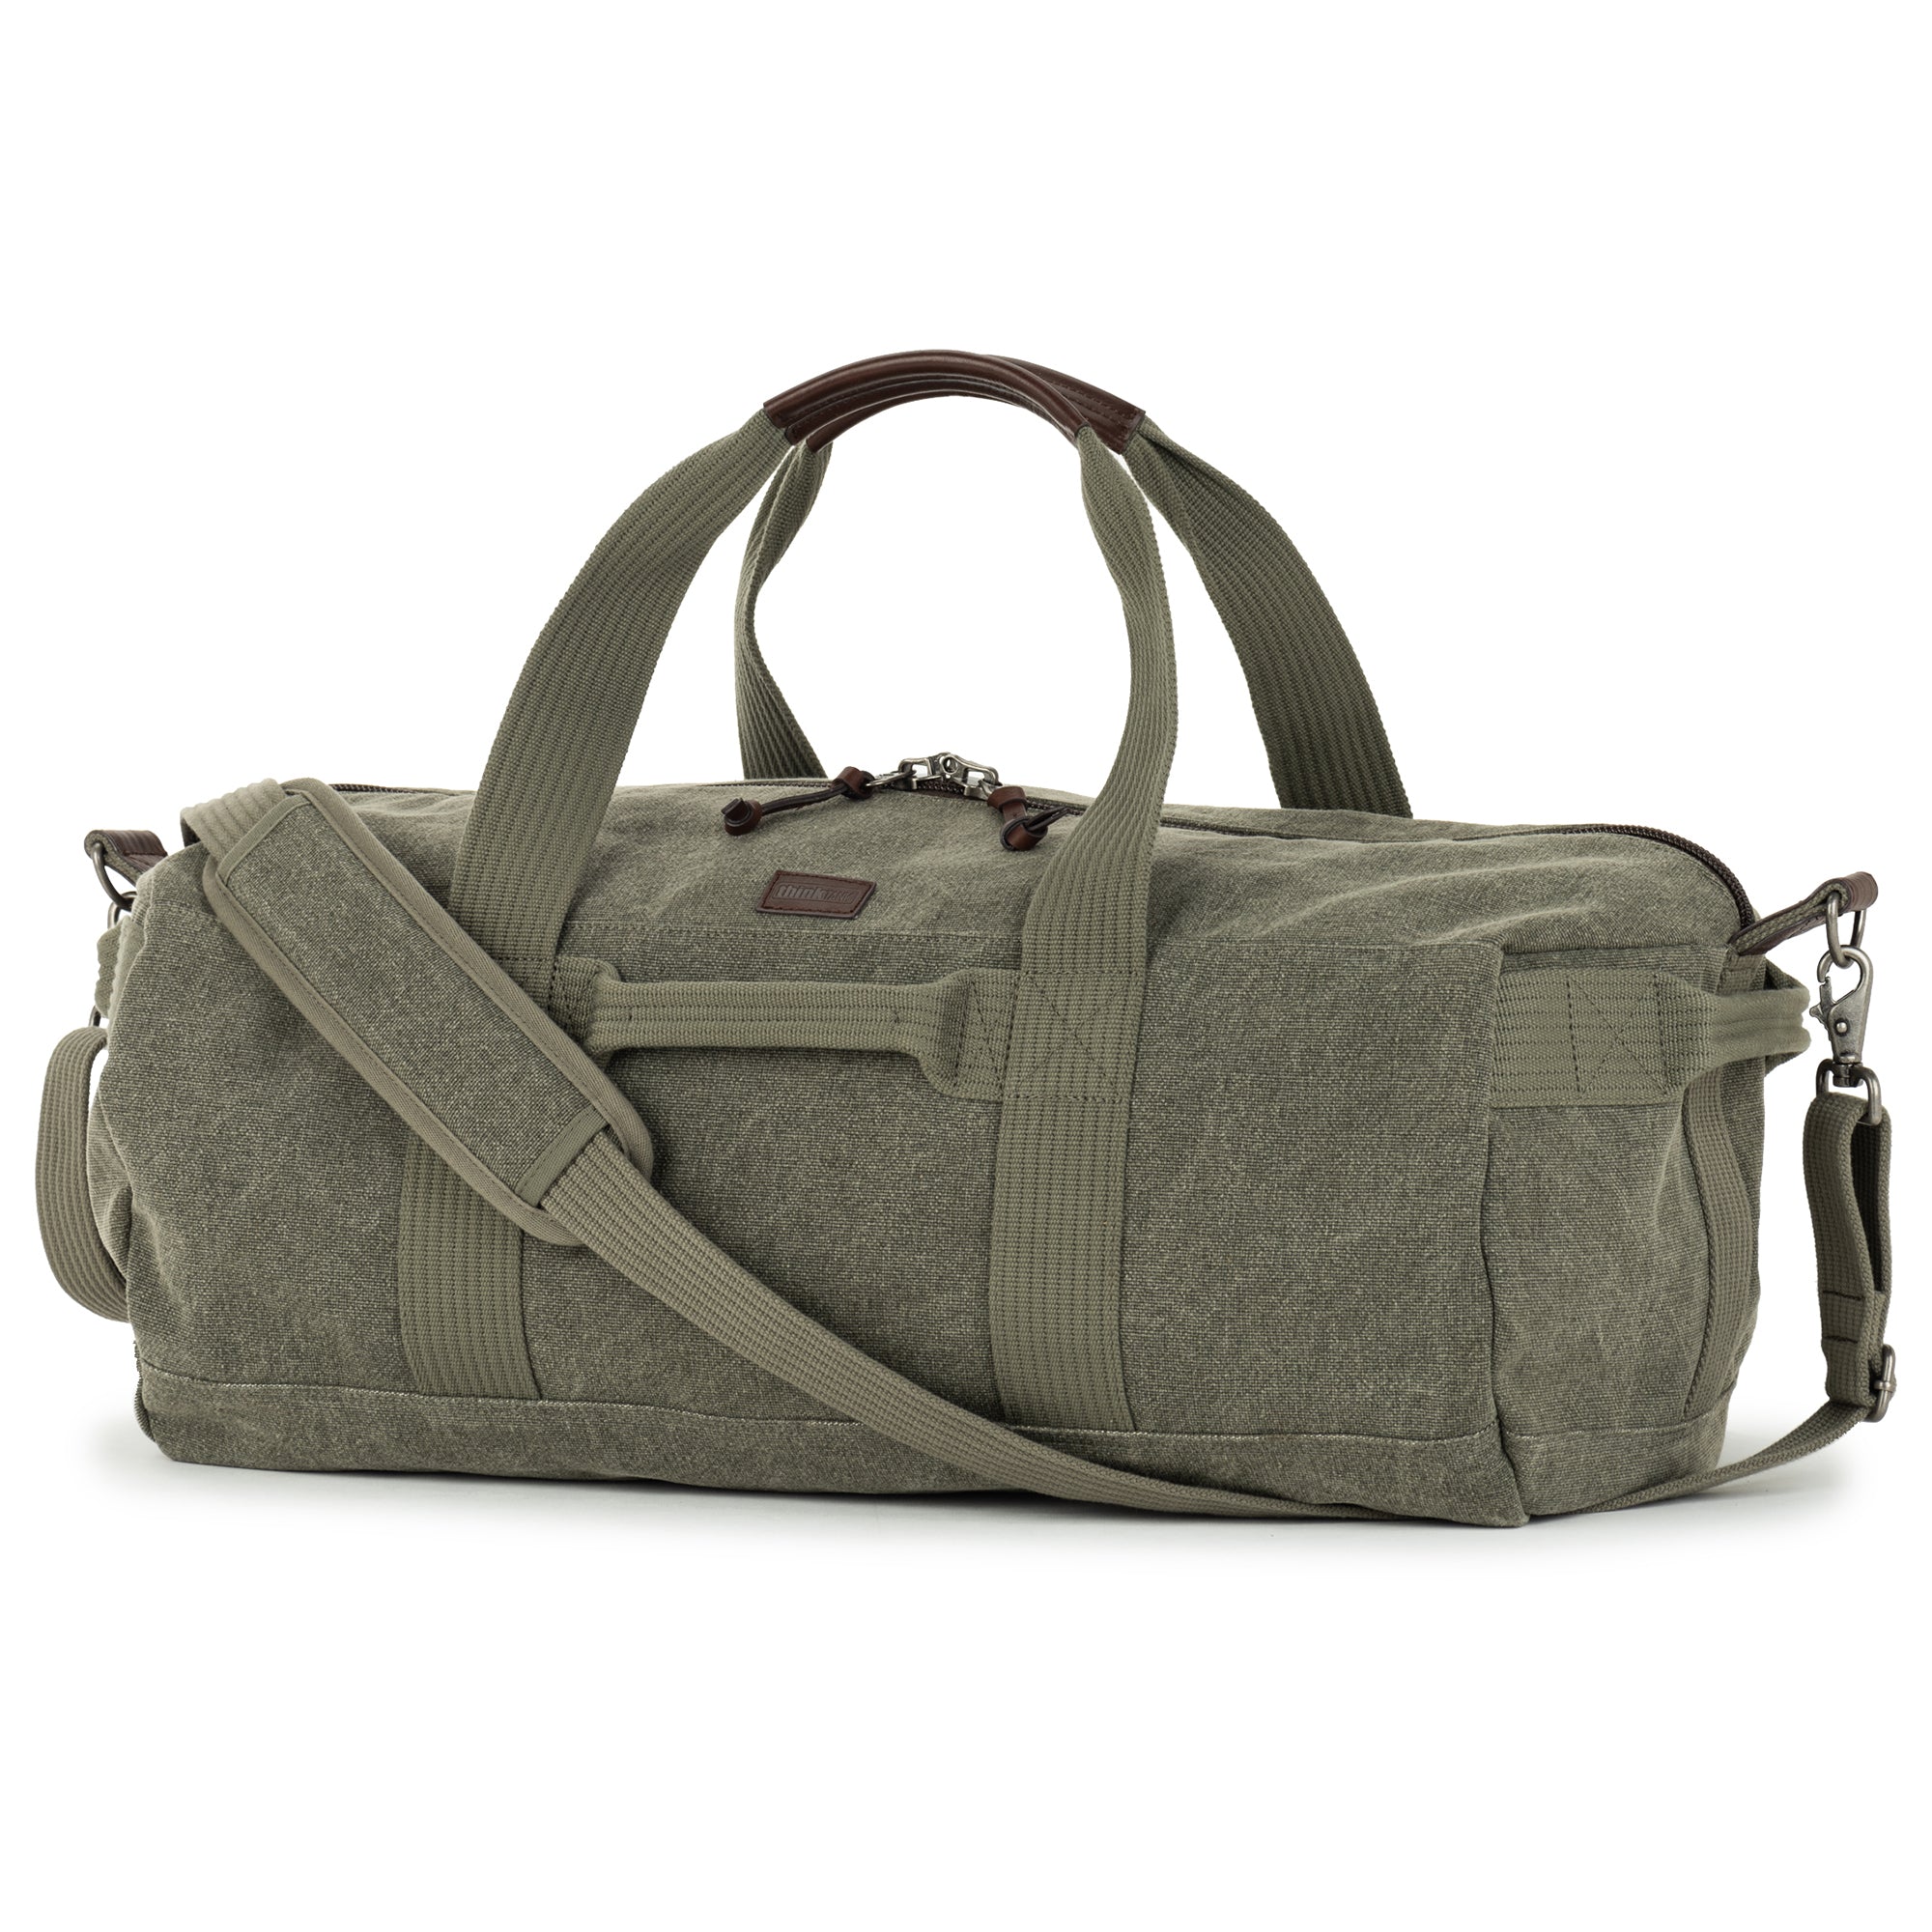 Duffle Bags - Buy Duffle Bags Online Upto 72% Off